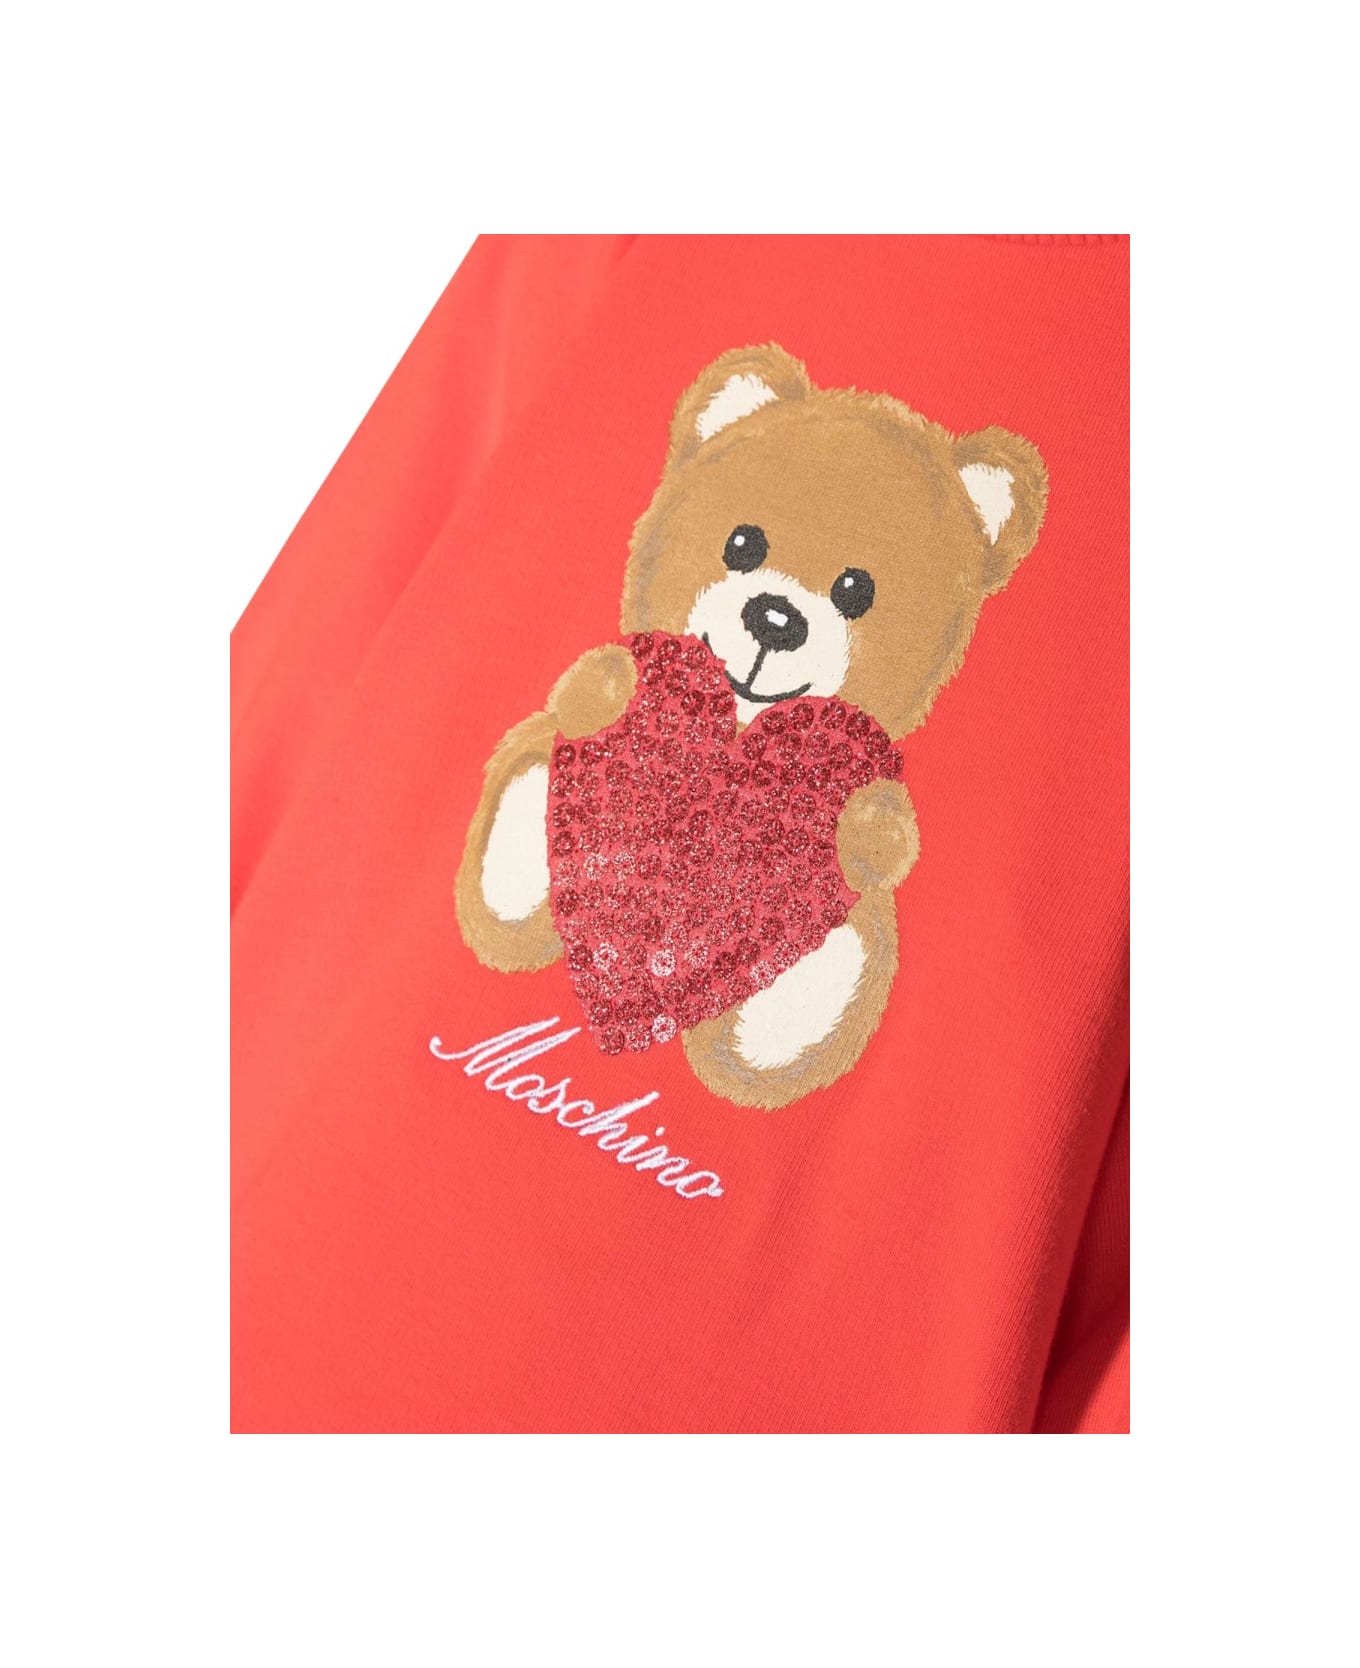 Moschino Dress Ml Bear - RED